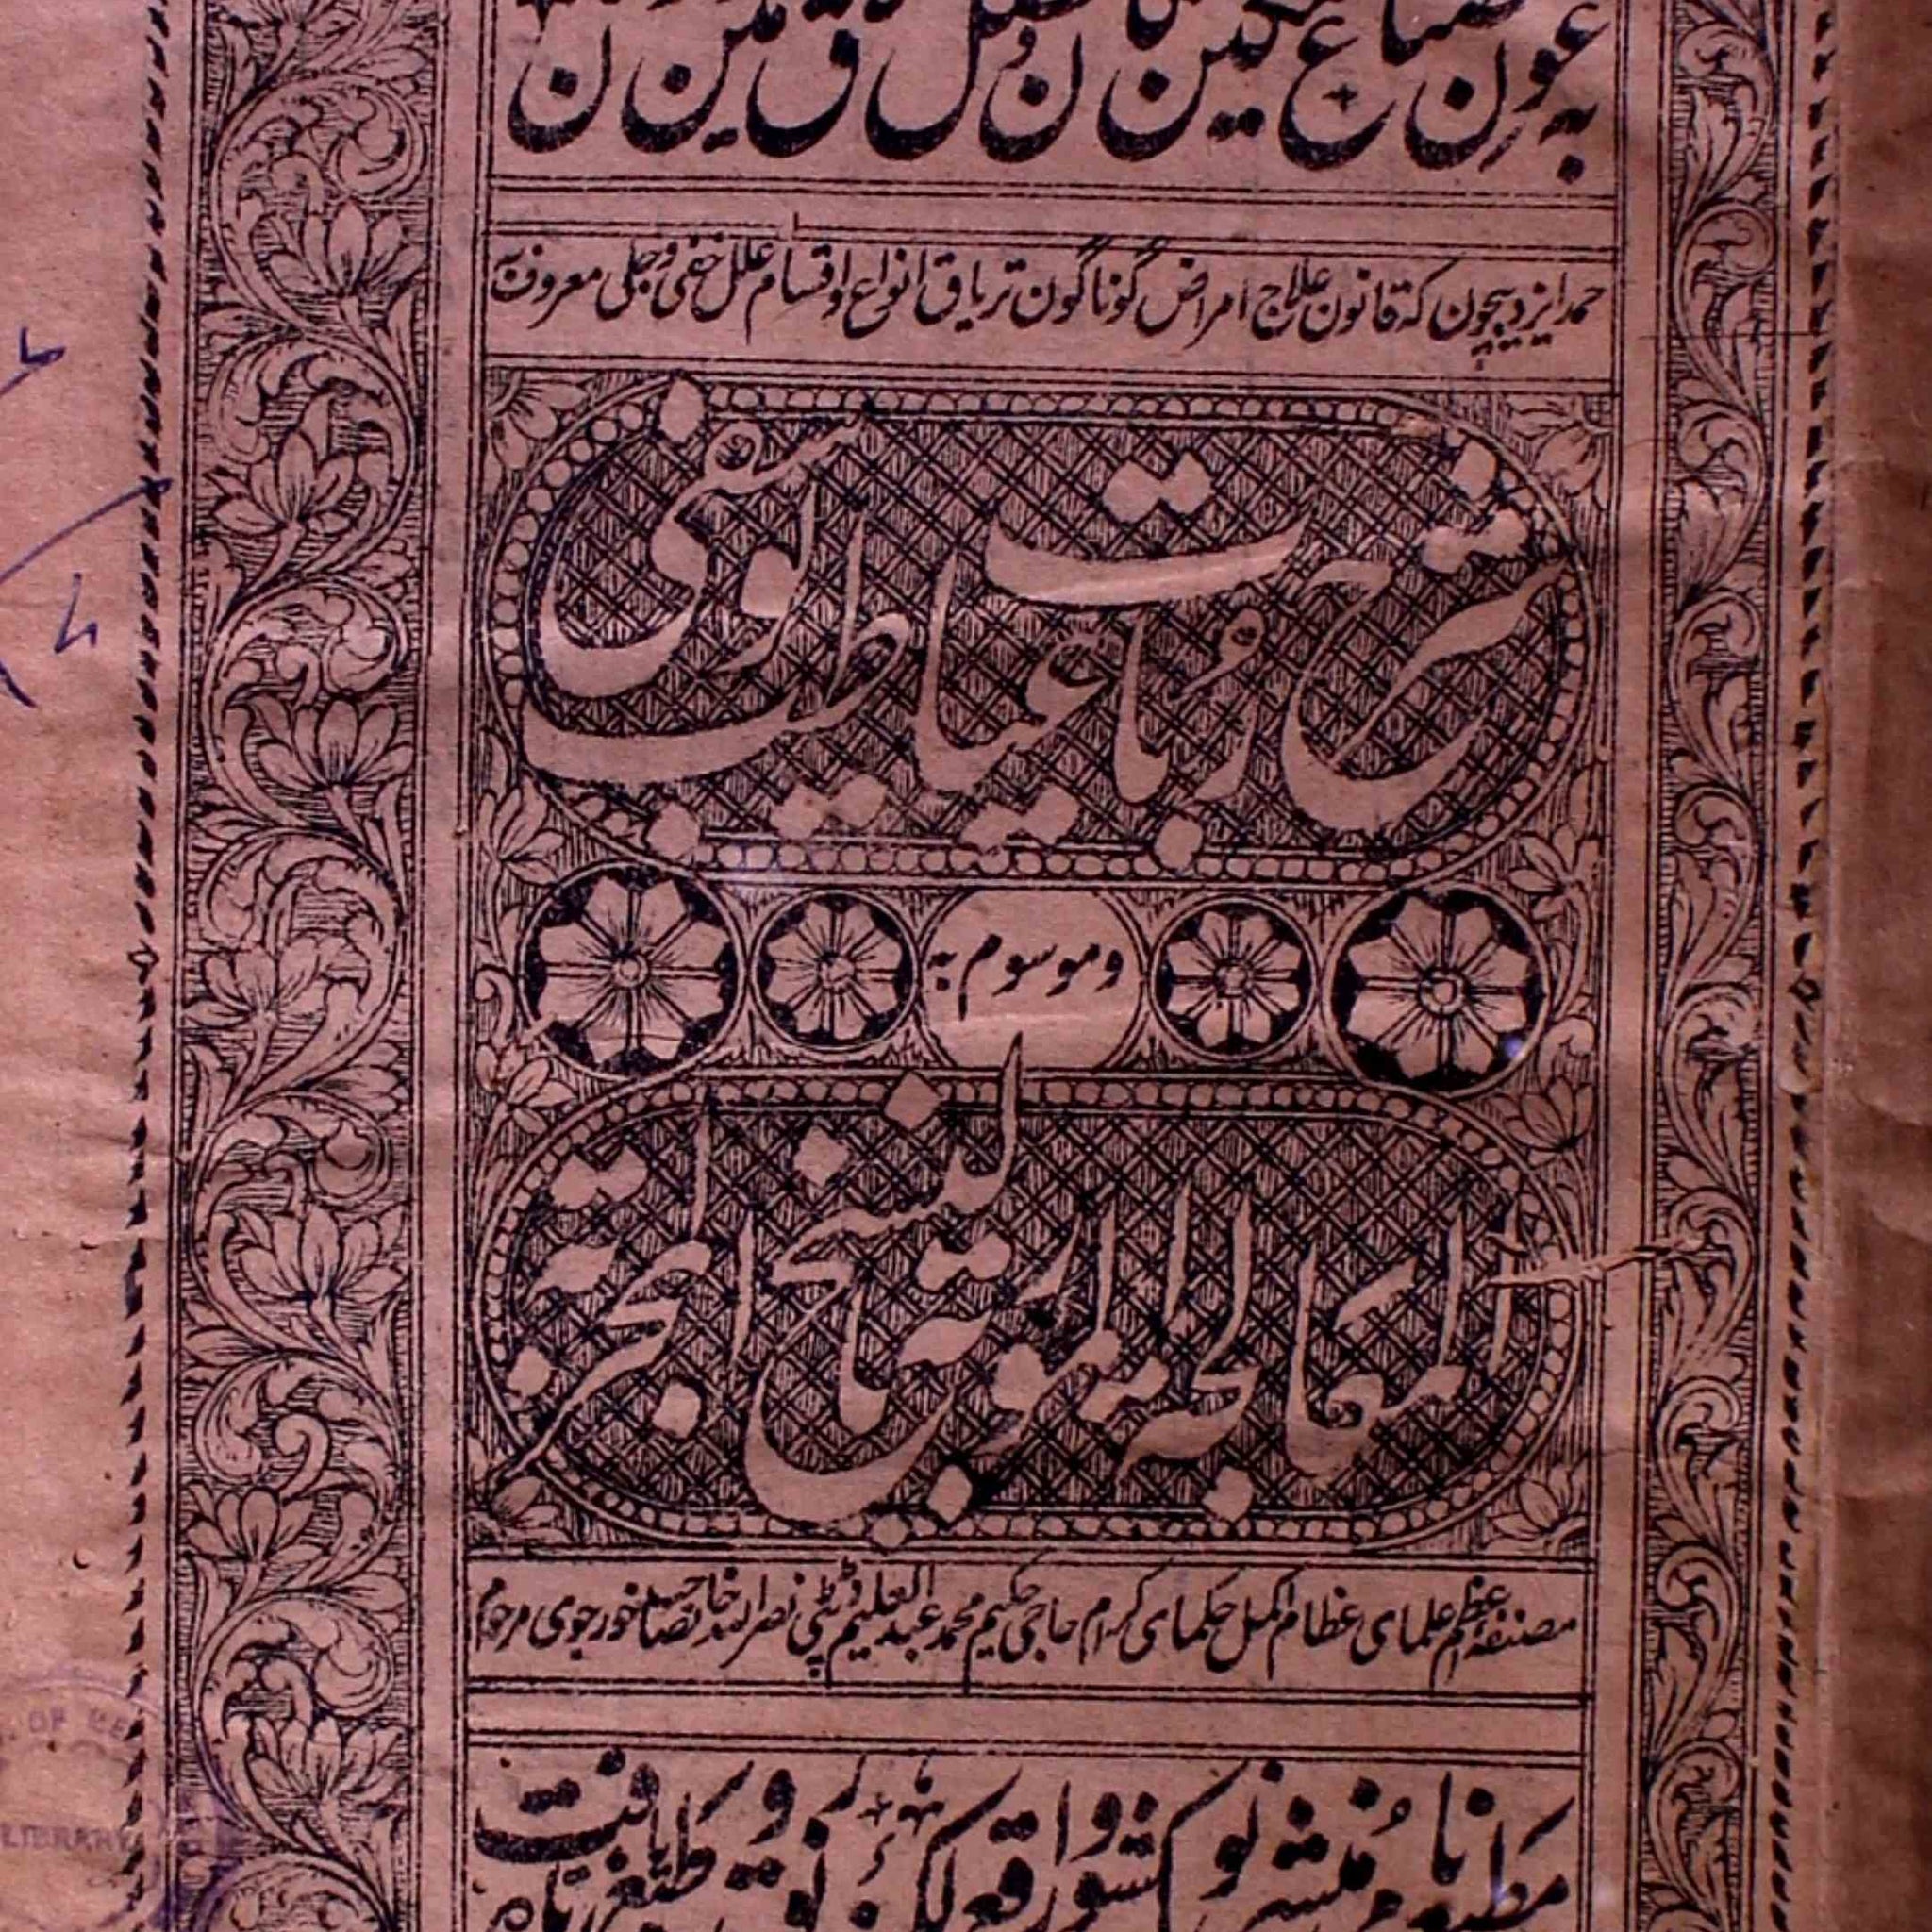 Sharh-e-Rubaiyat-e-Tibb-e-Yusufi